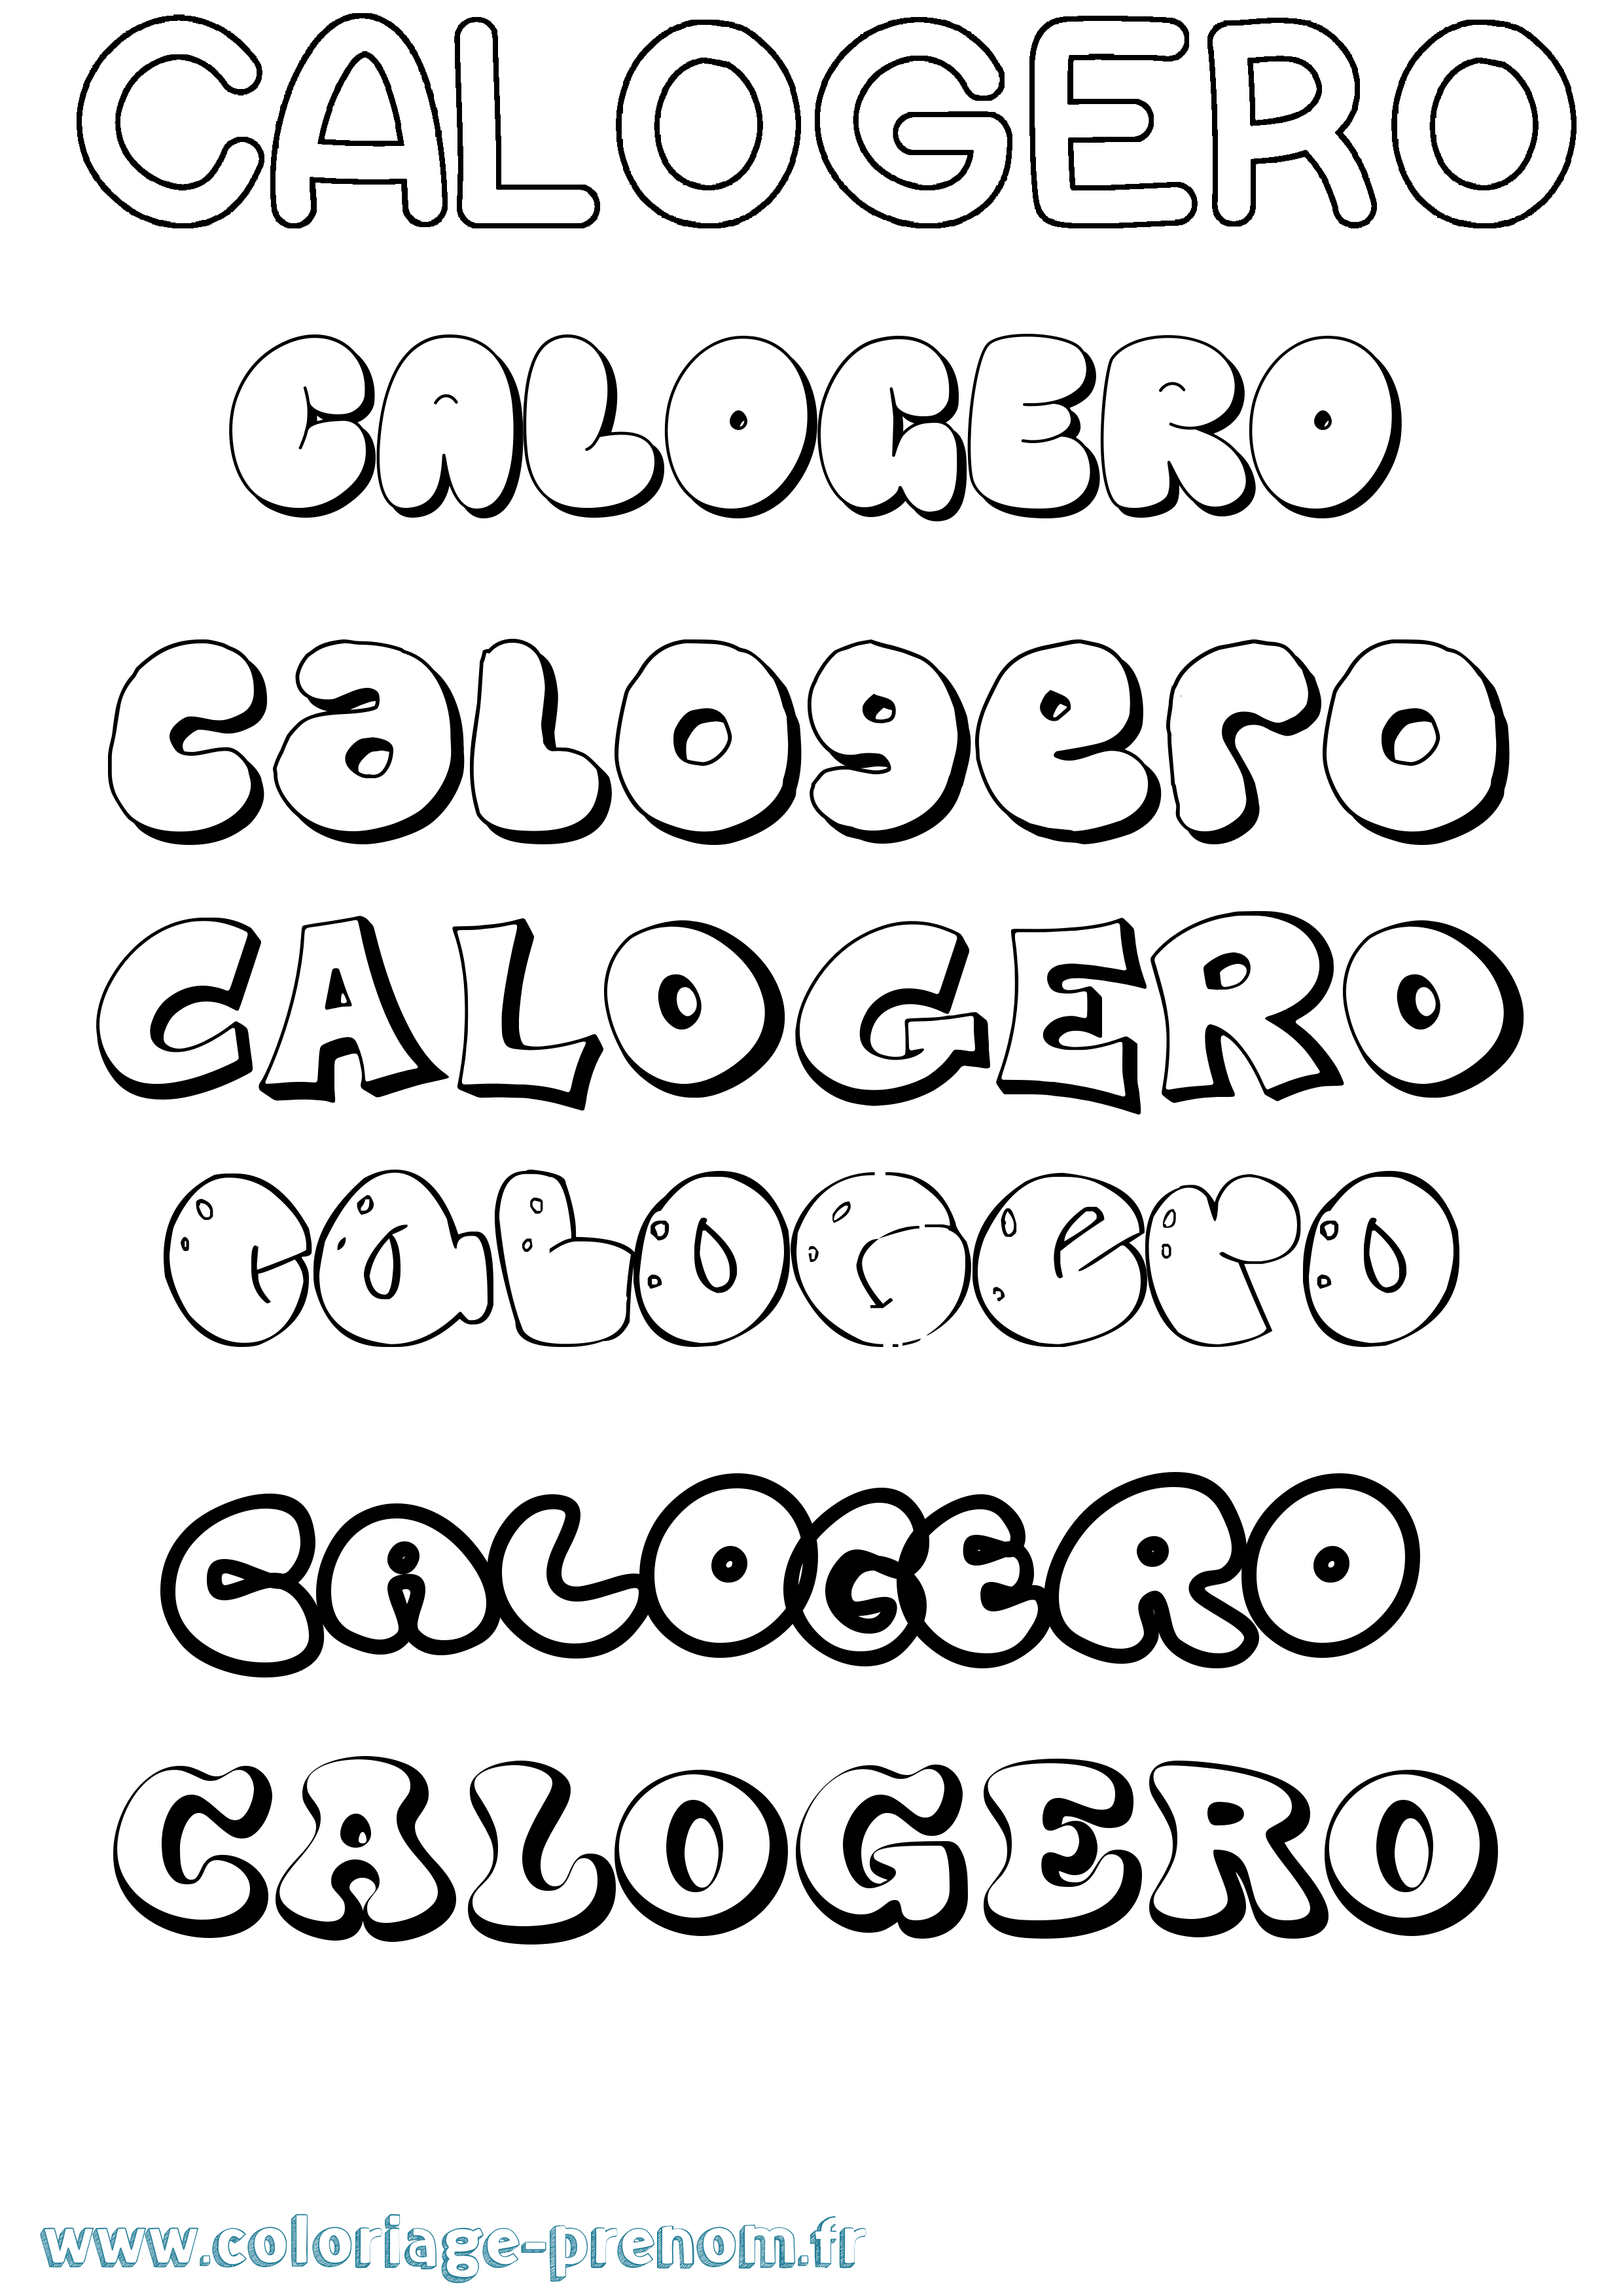 Coloriage prénom Calogero Bubble